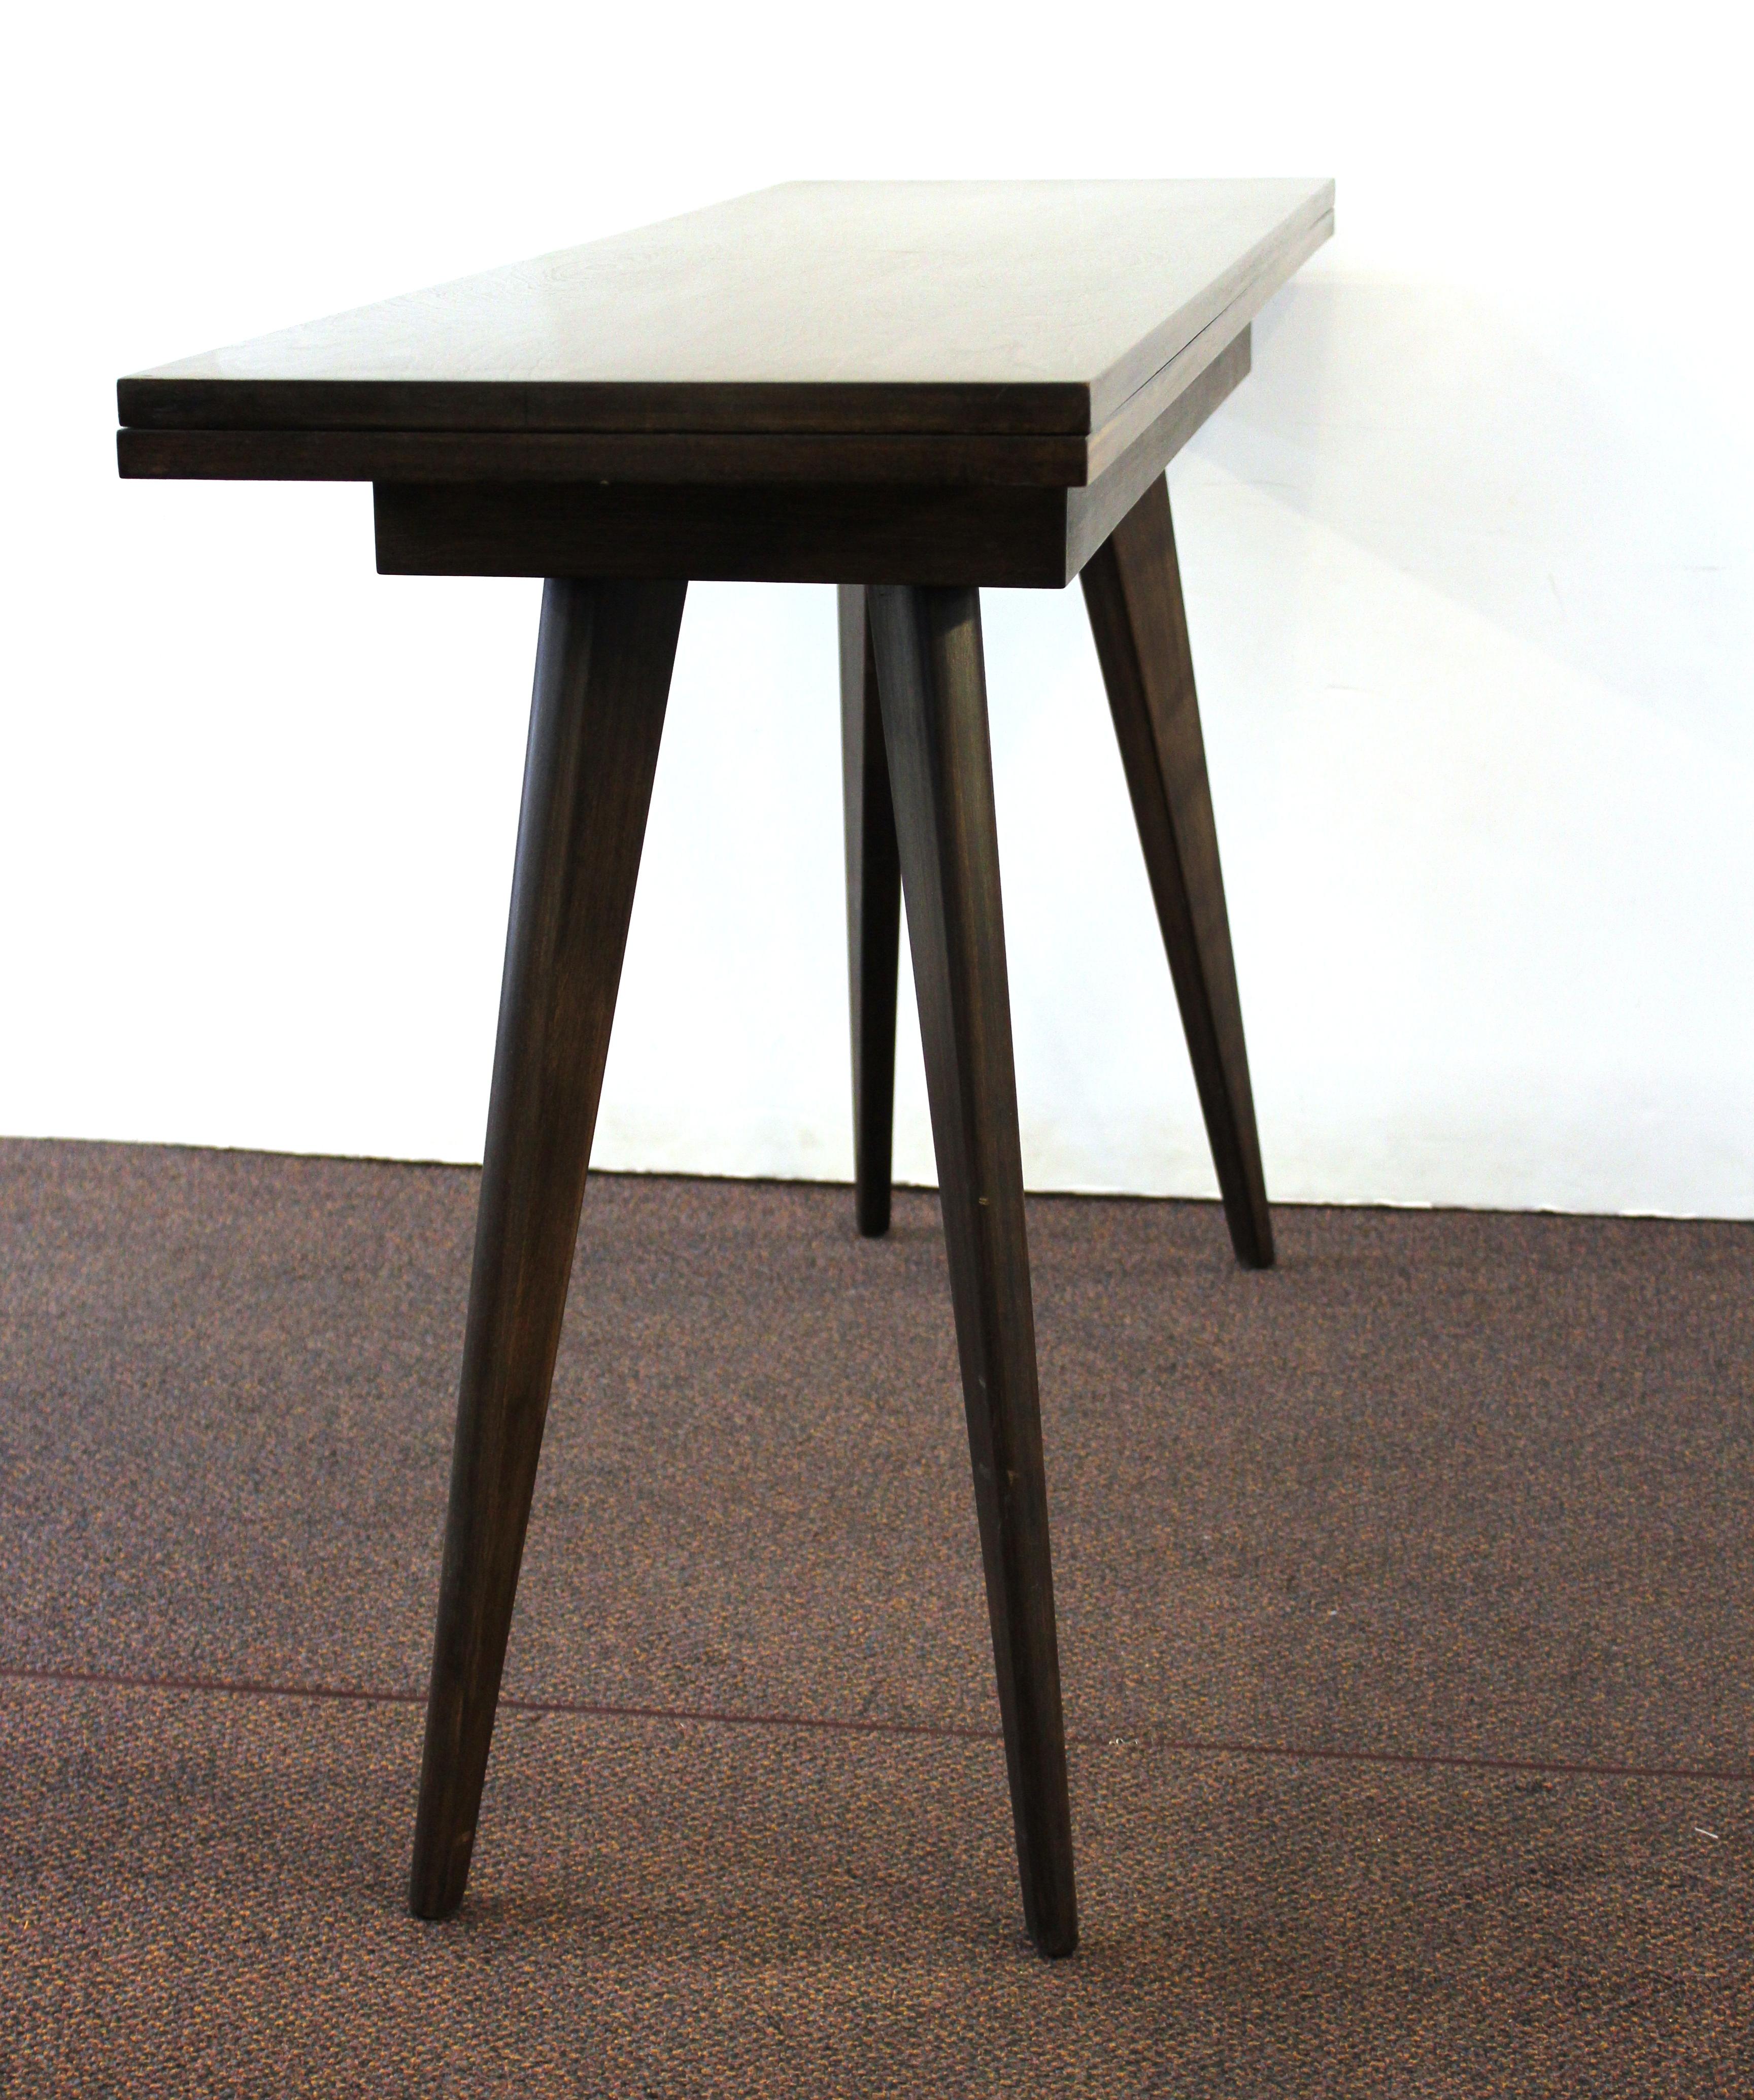 20th Century Mid-Century Modern Dunbar-Style Flip-Top Table or Console